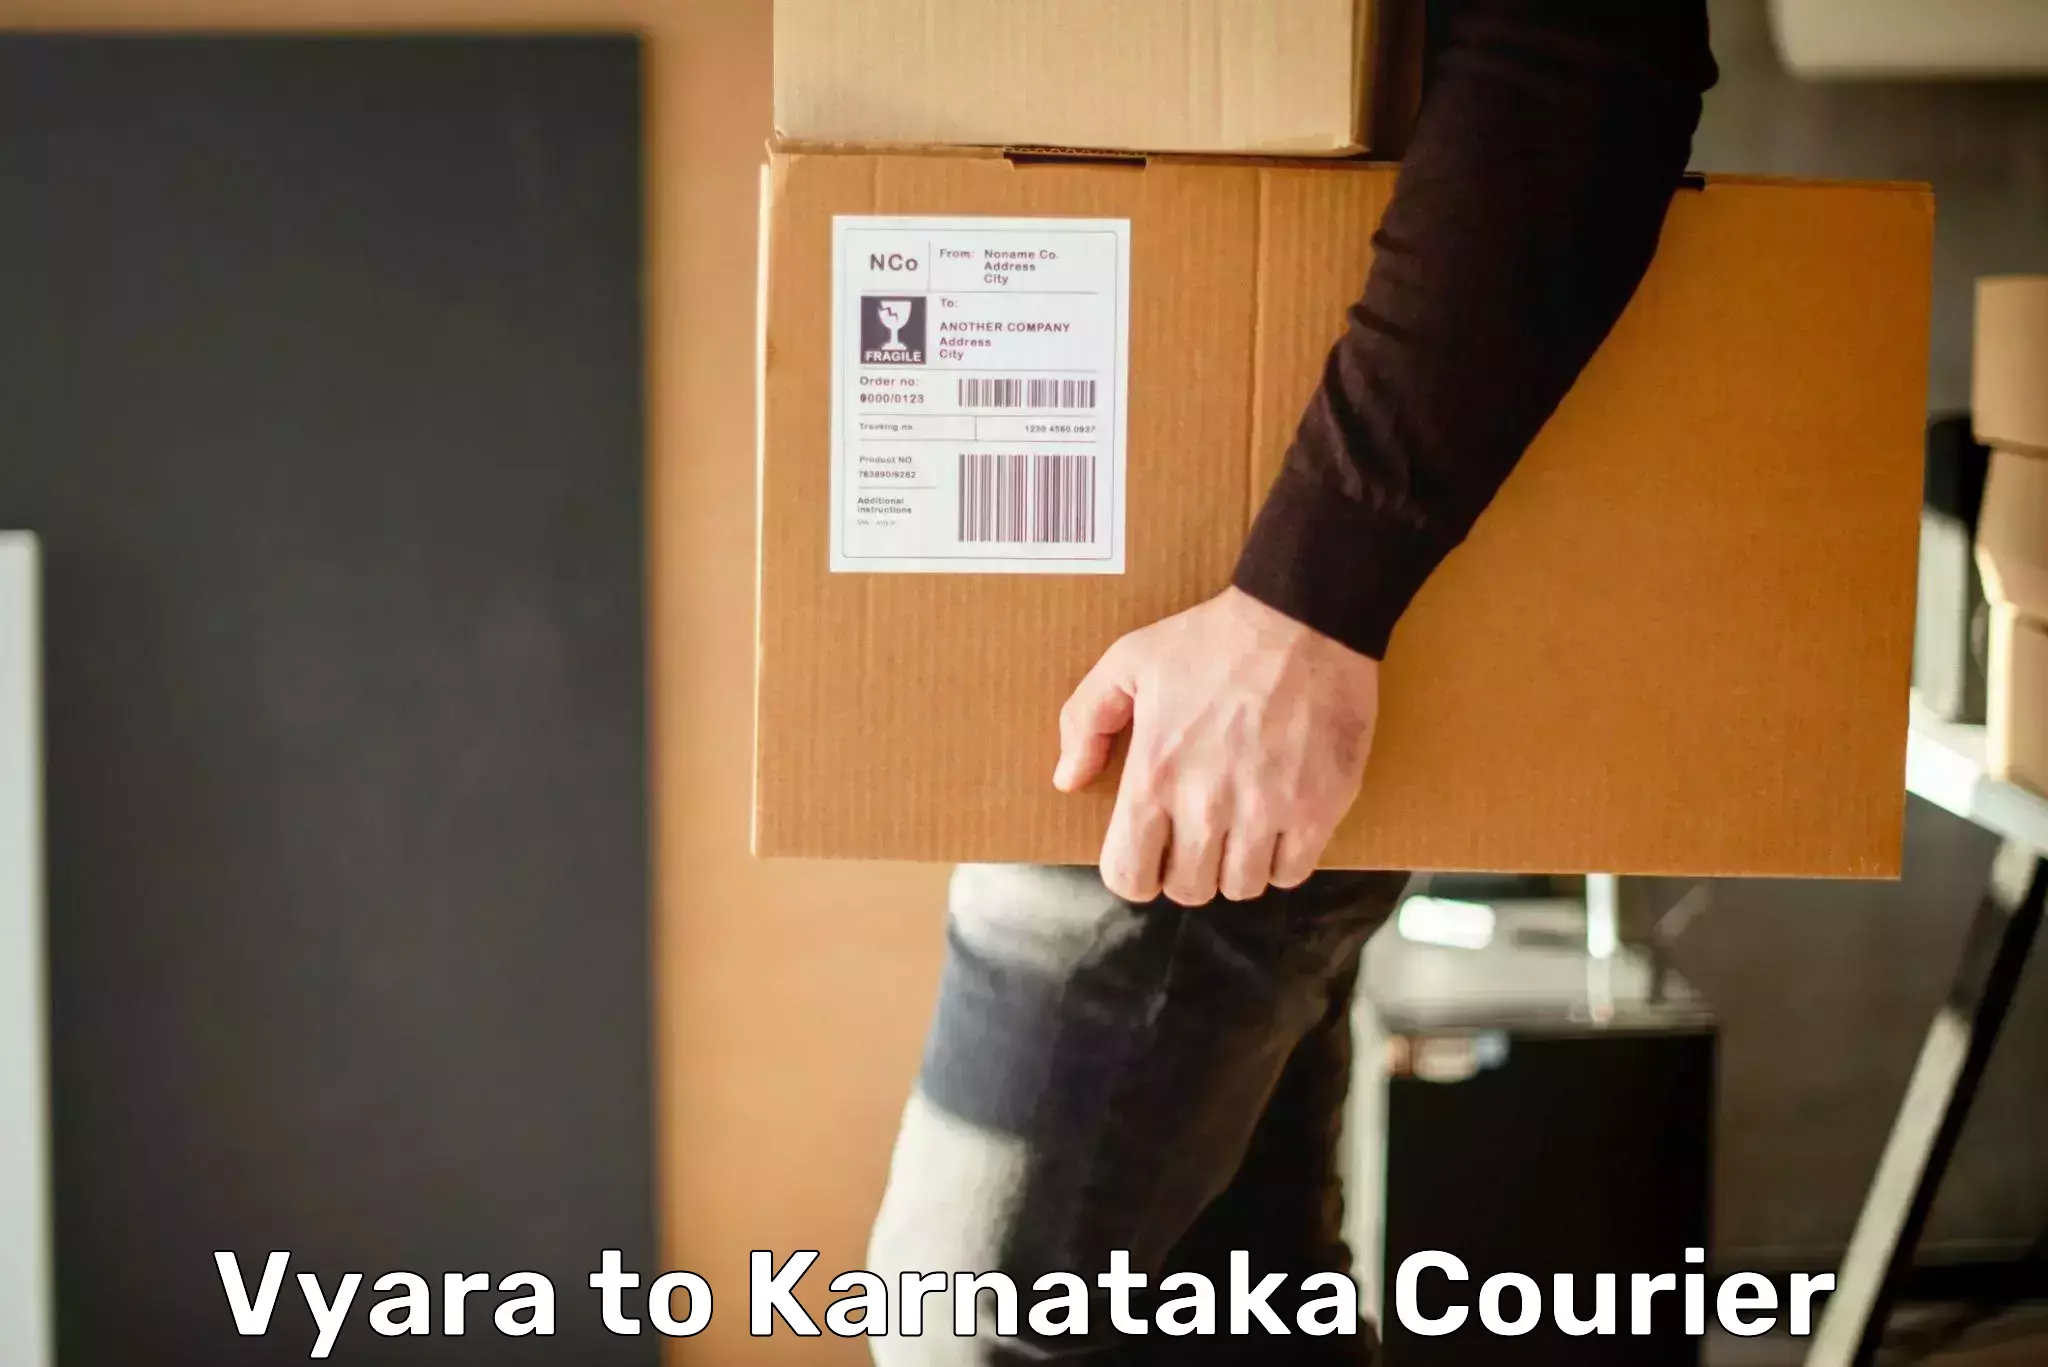 Sustainable courier practices Vyara to Karnataka